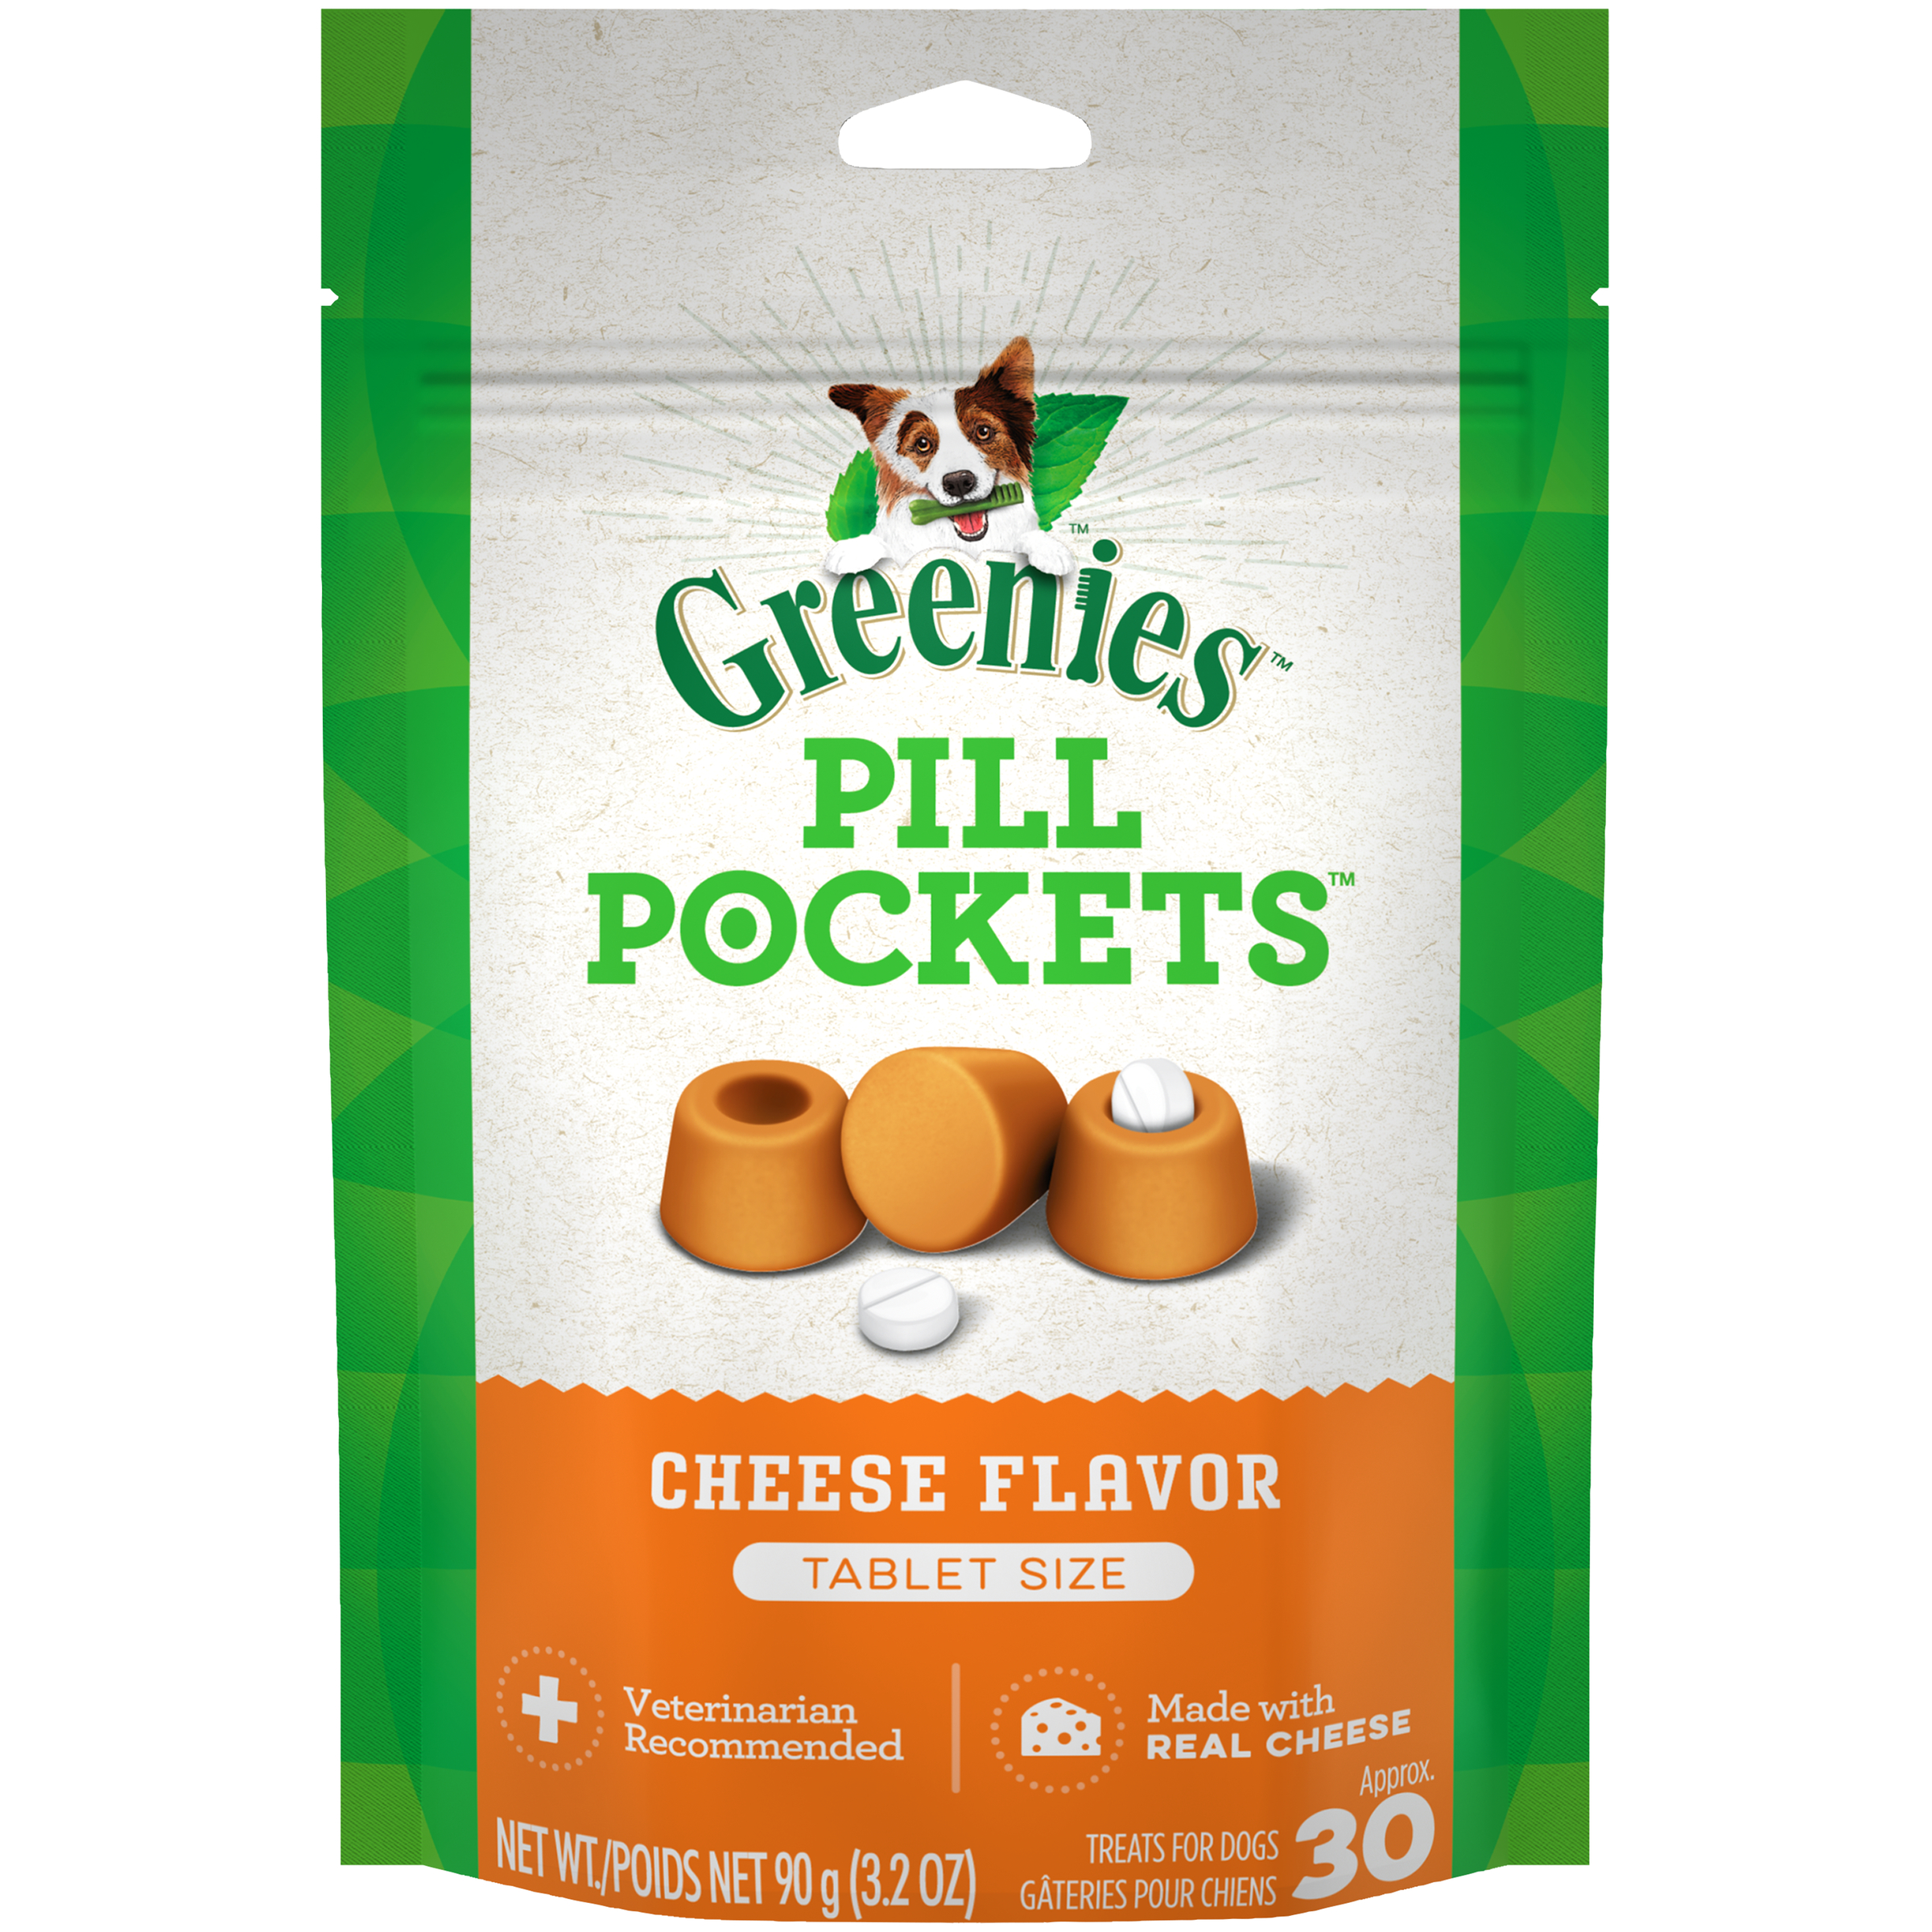 Greenies Pill Pockets -  Cheese Flavor, Tablet Size, Dog Treats 3.2 oz.